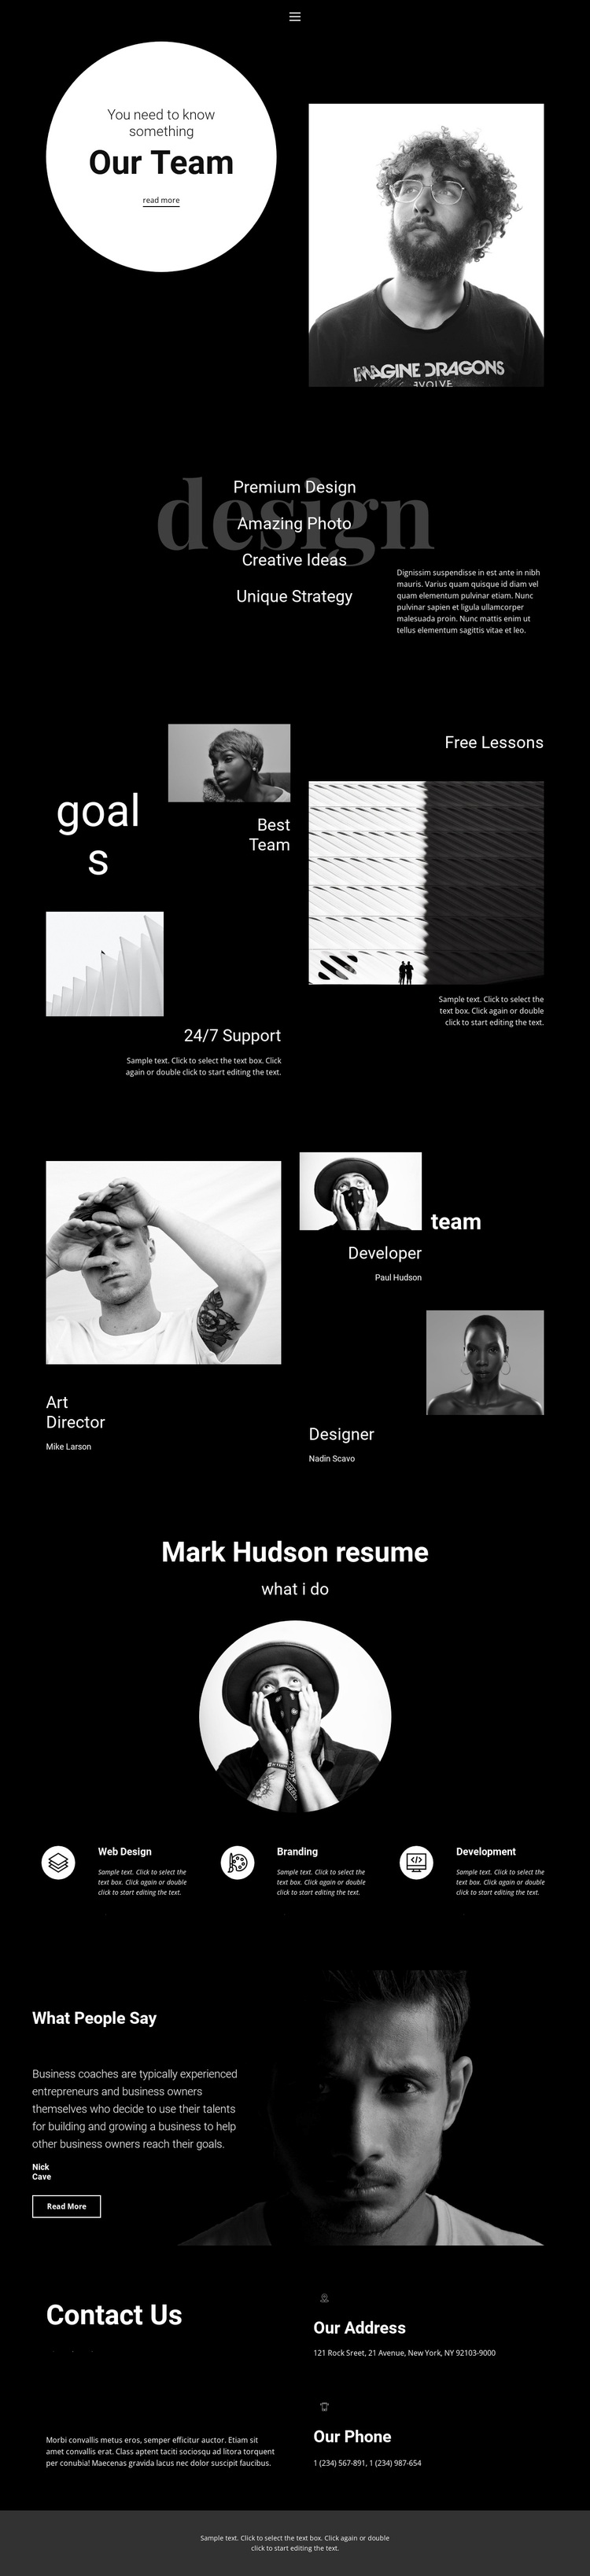 Design and development team Template